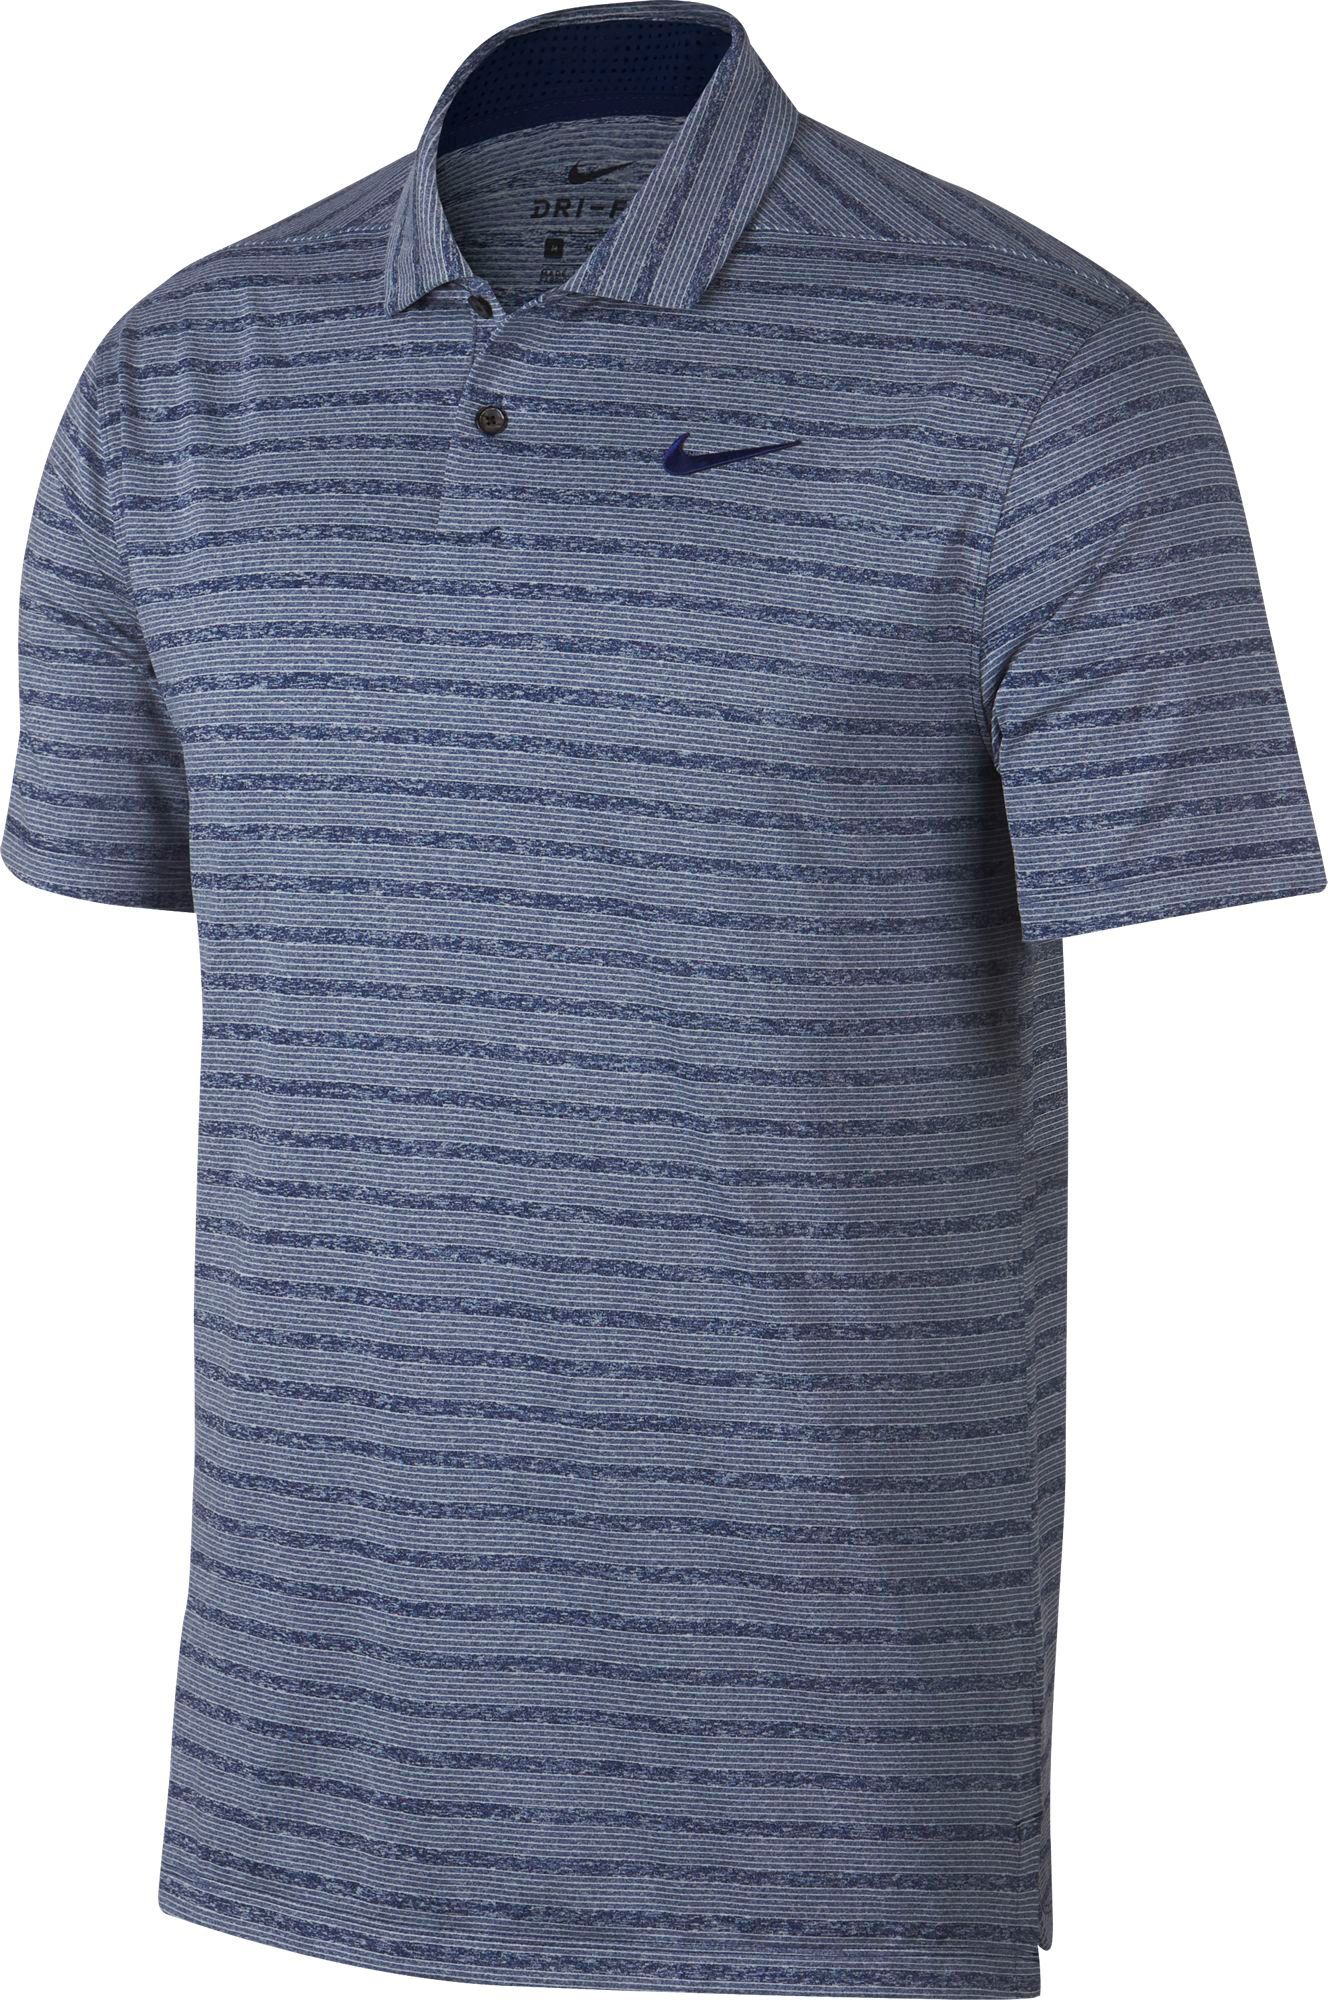 Nike Men's Vapor Stripe Golf Polo - .97 - .97